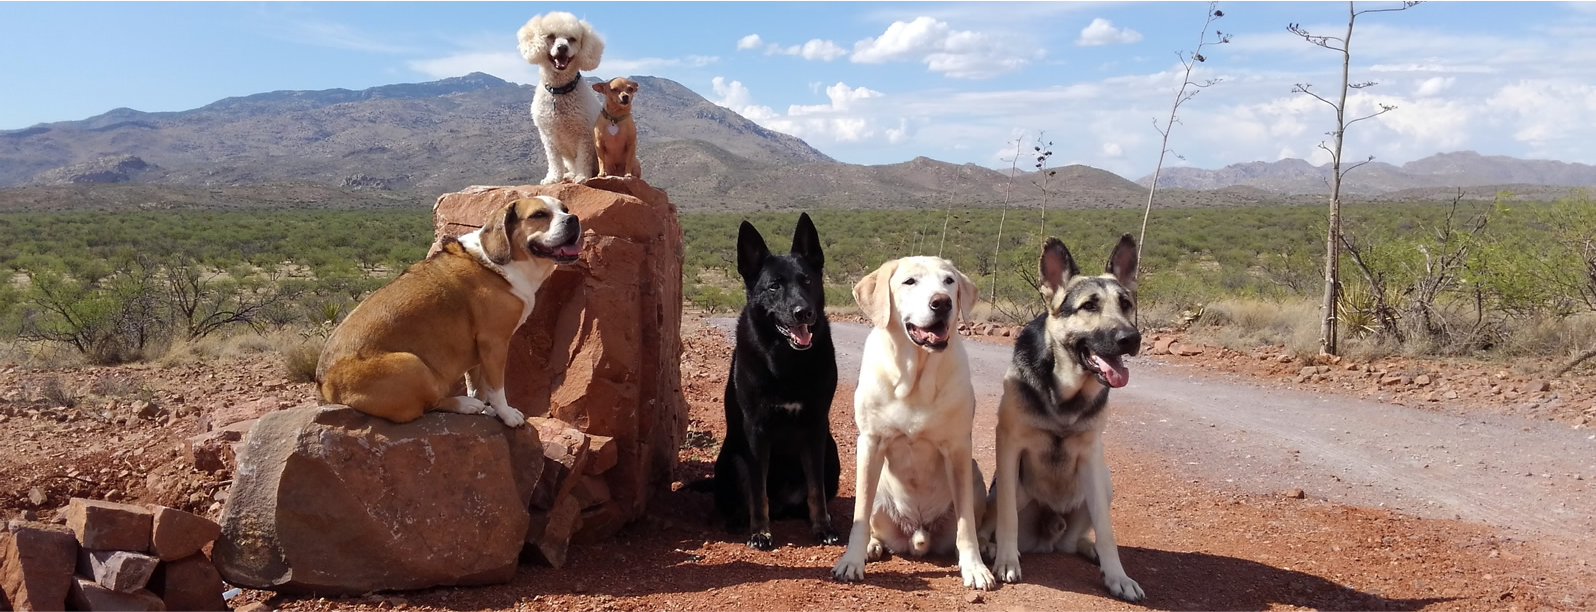 Group of dogs sitting in an outside desert landscape.